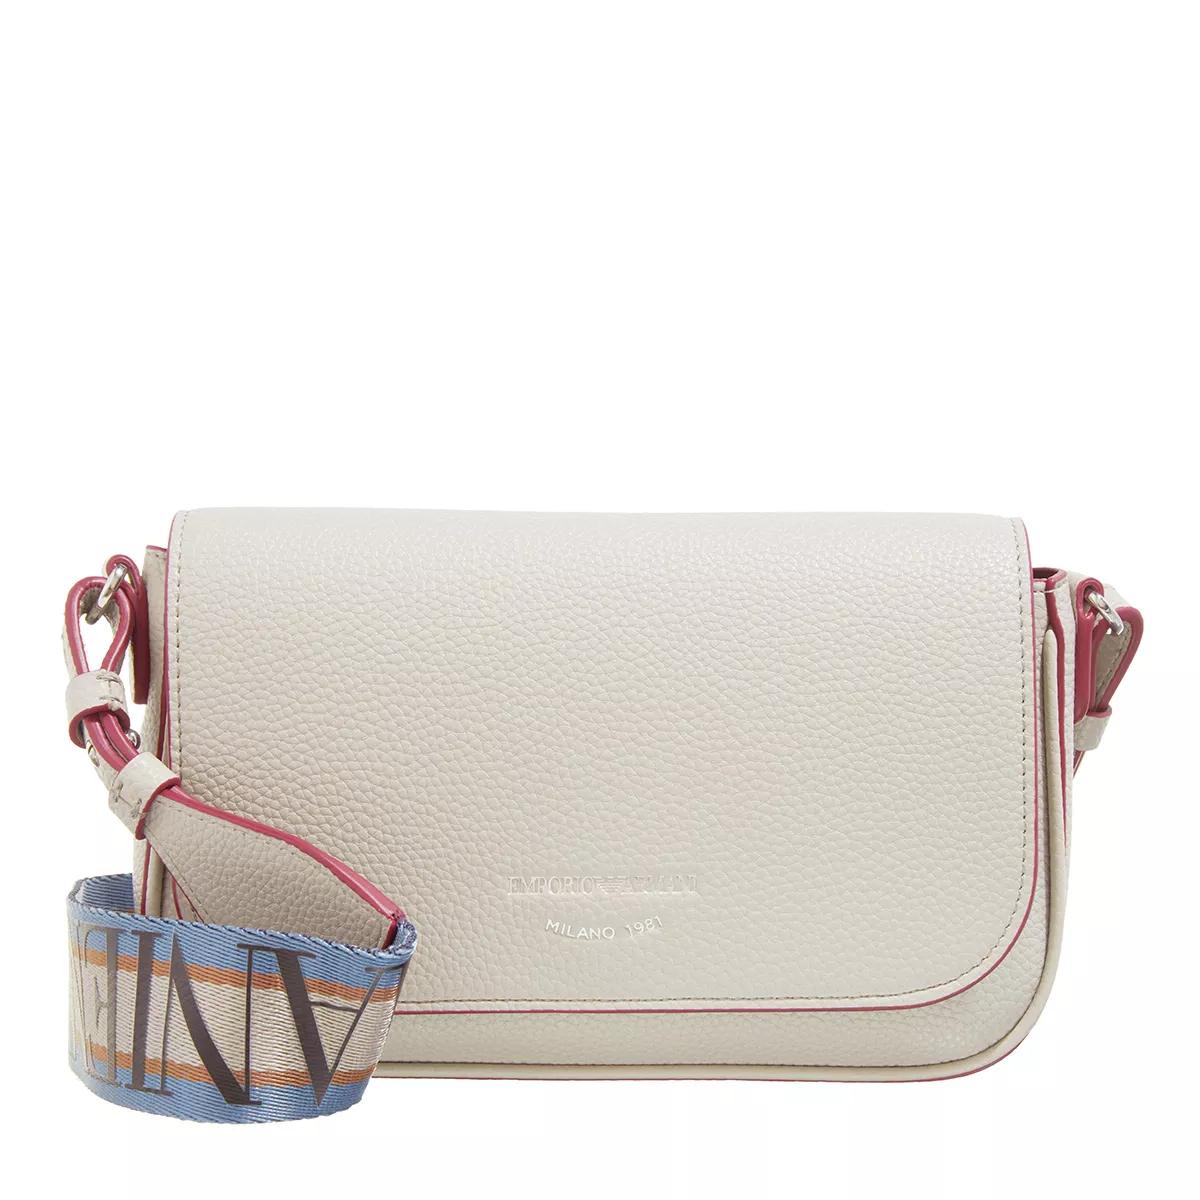 Emporio Armani Minibag Mercury Geranium | Crossbody Bag | fashionette